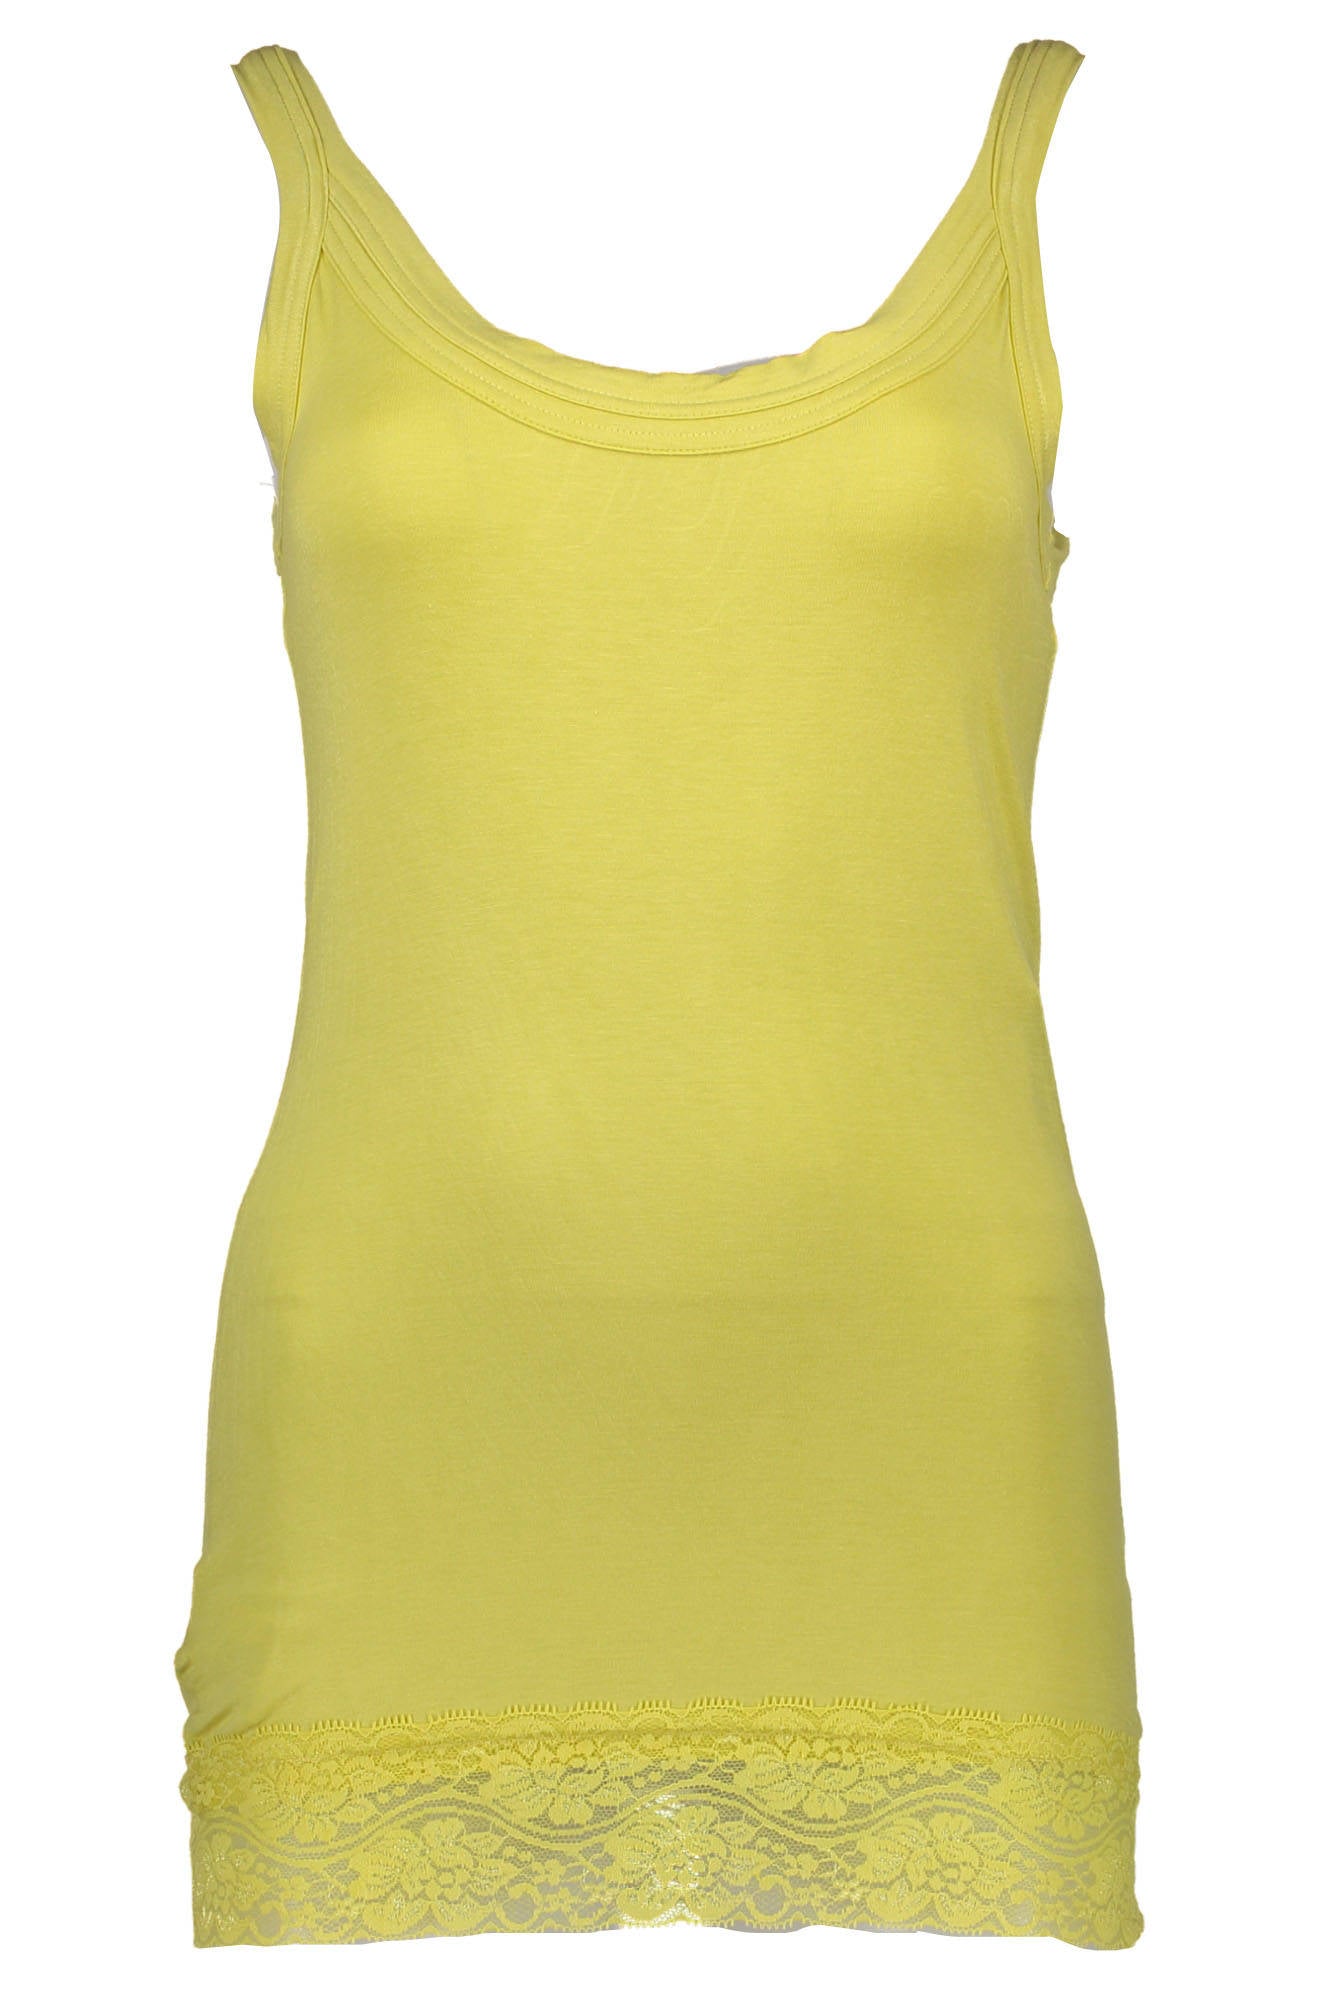 Silvian Heach Yellow Tops & T-Shirt - Fizigo